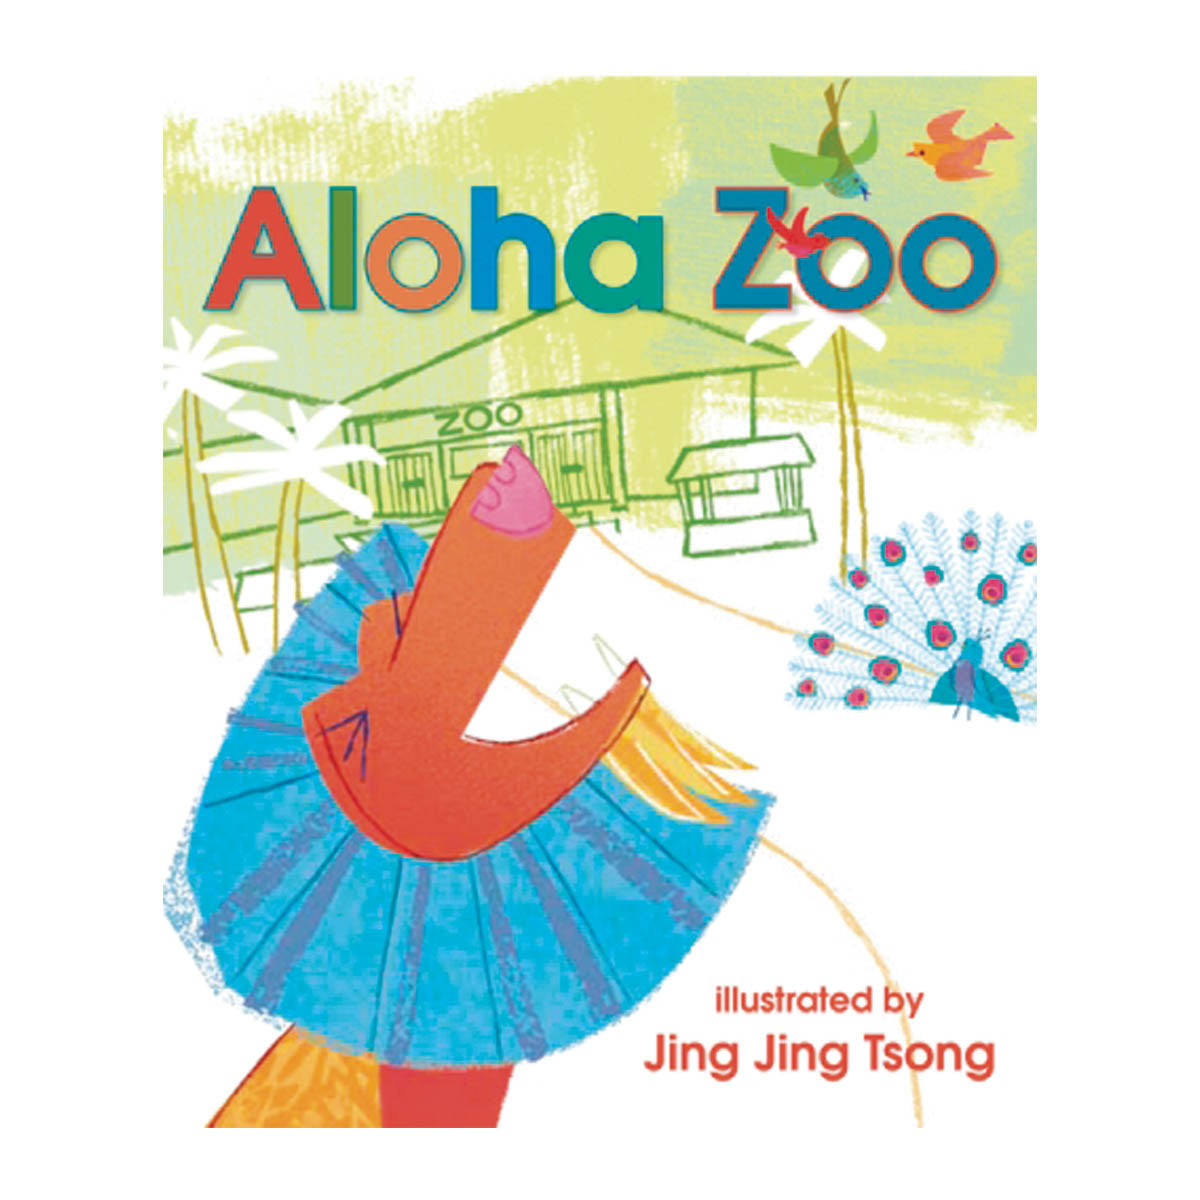 Aloha Zoo